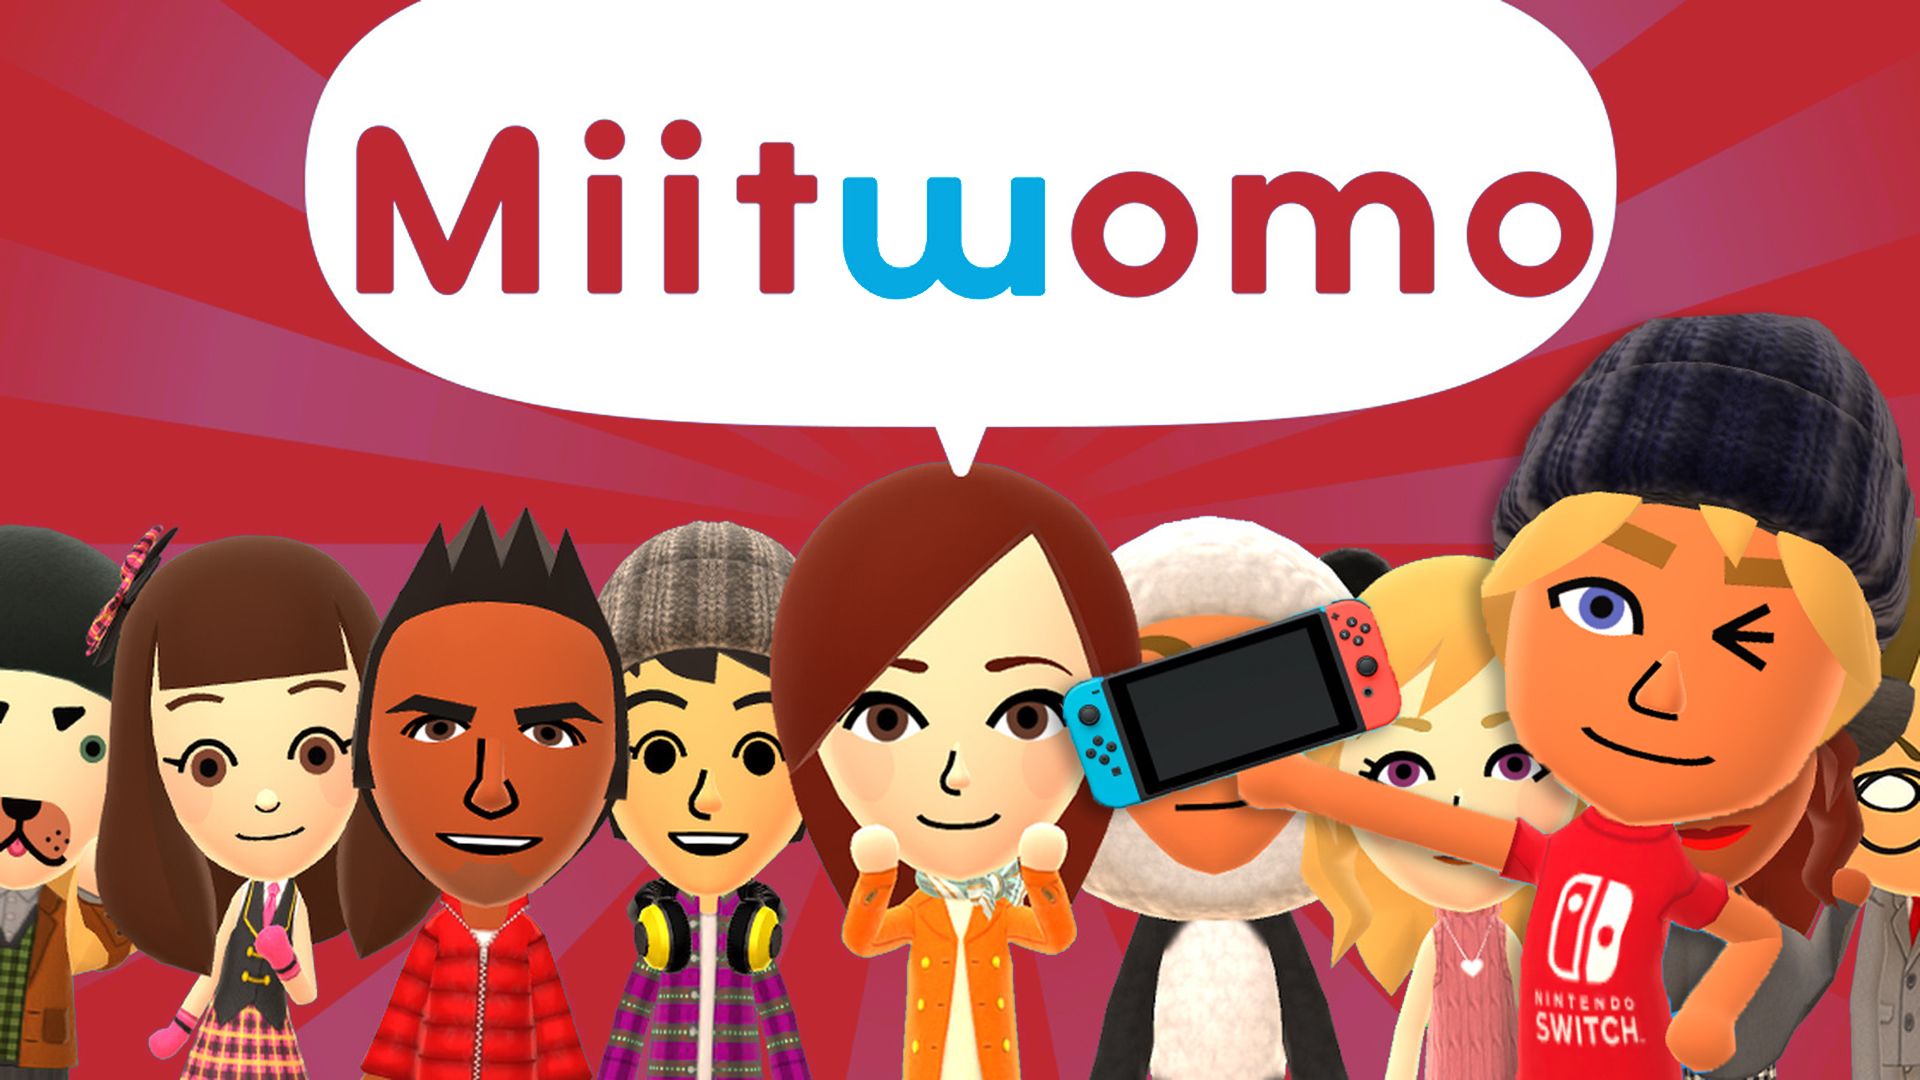 On Heels of Miitomo's End of Service Announcement, Nintendo Announces Successor "MiiTwomo"